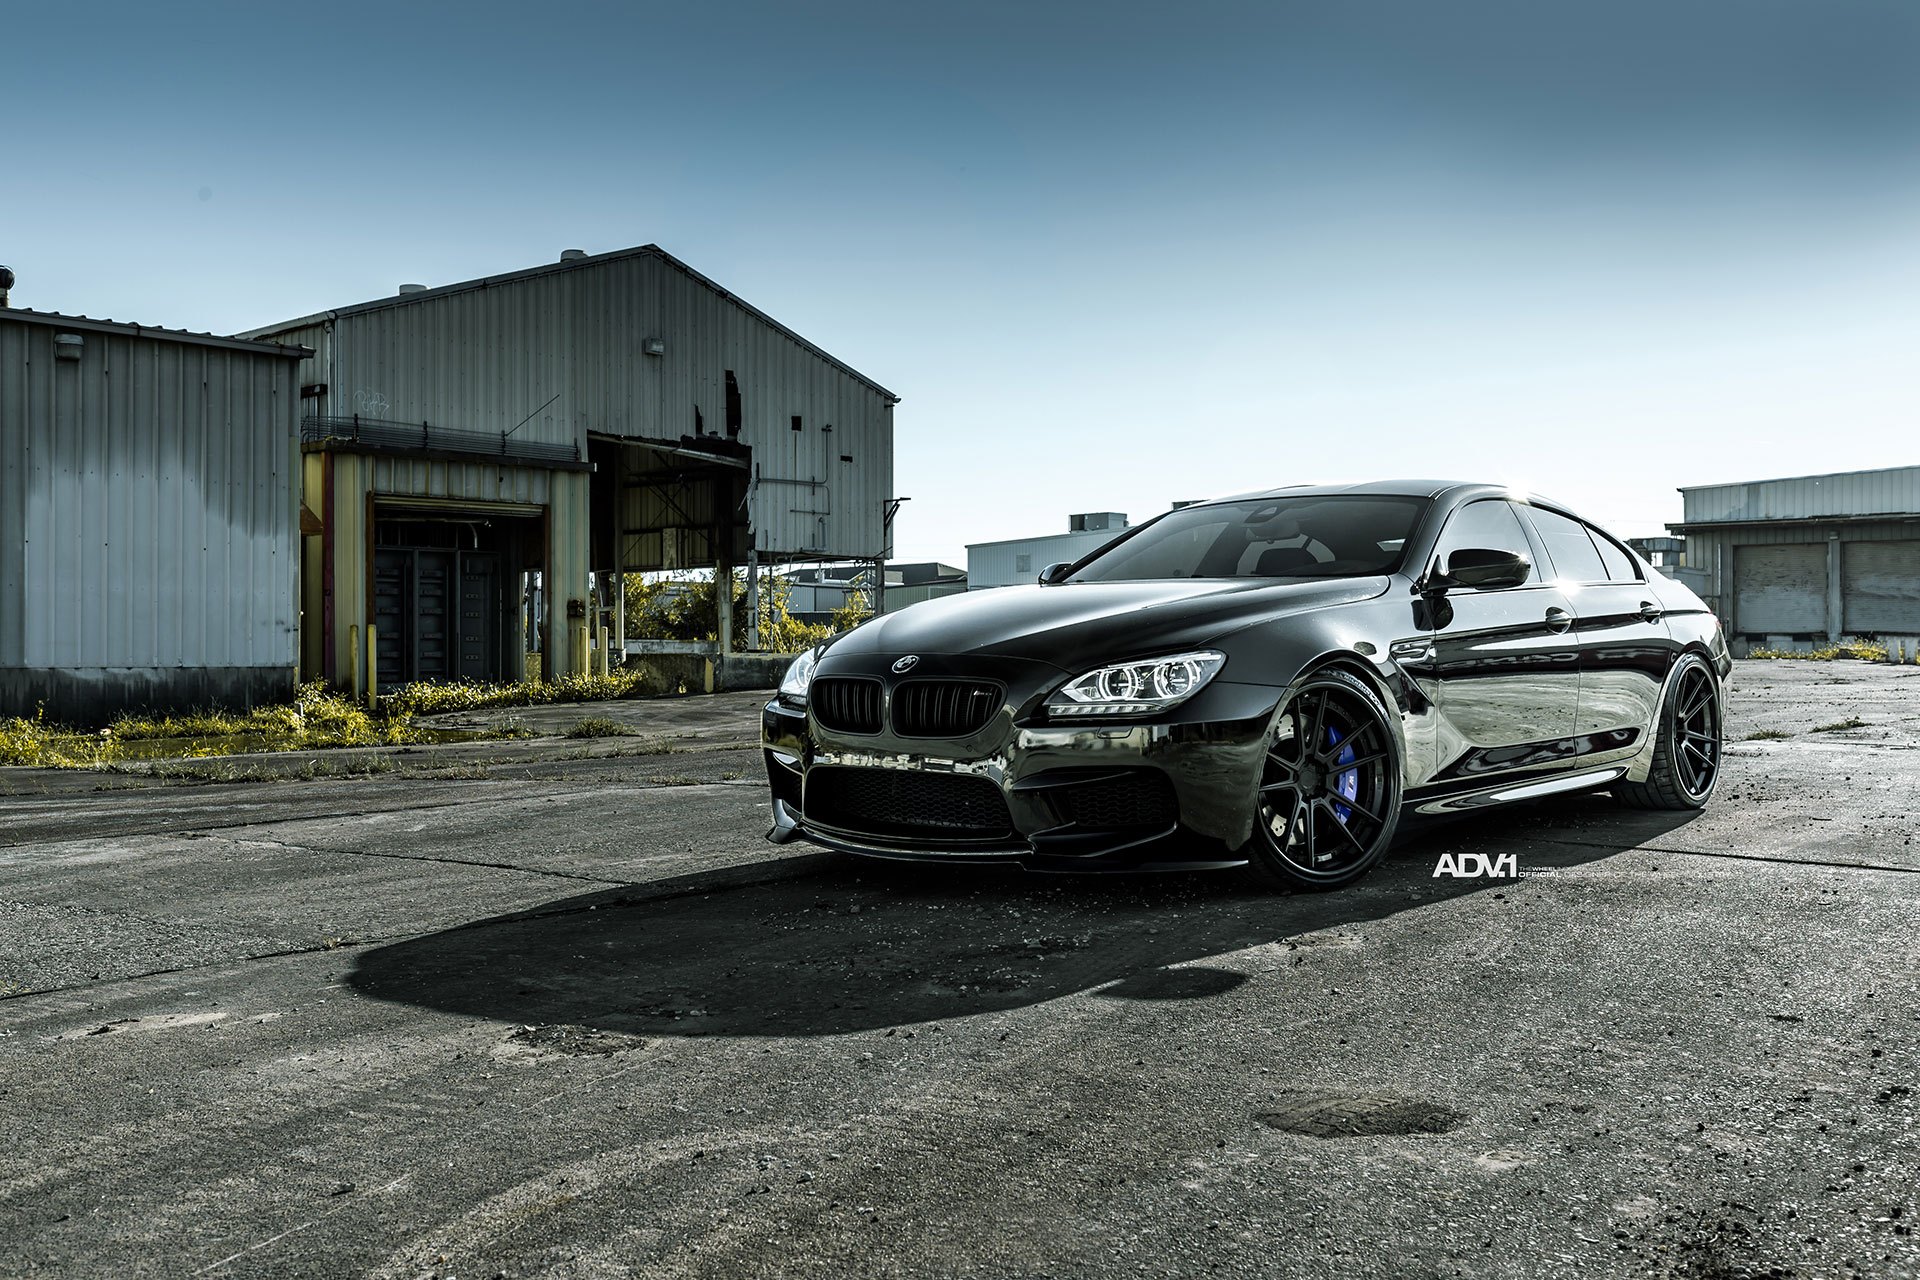 Custom Blacked Out BMW M6 - Photo by ADV.1